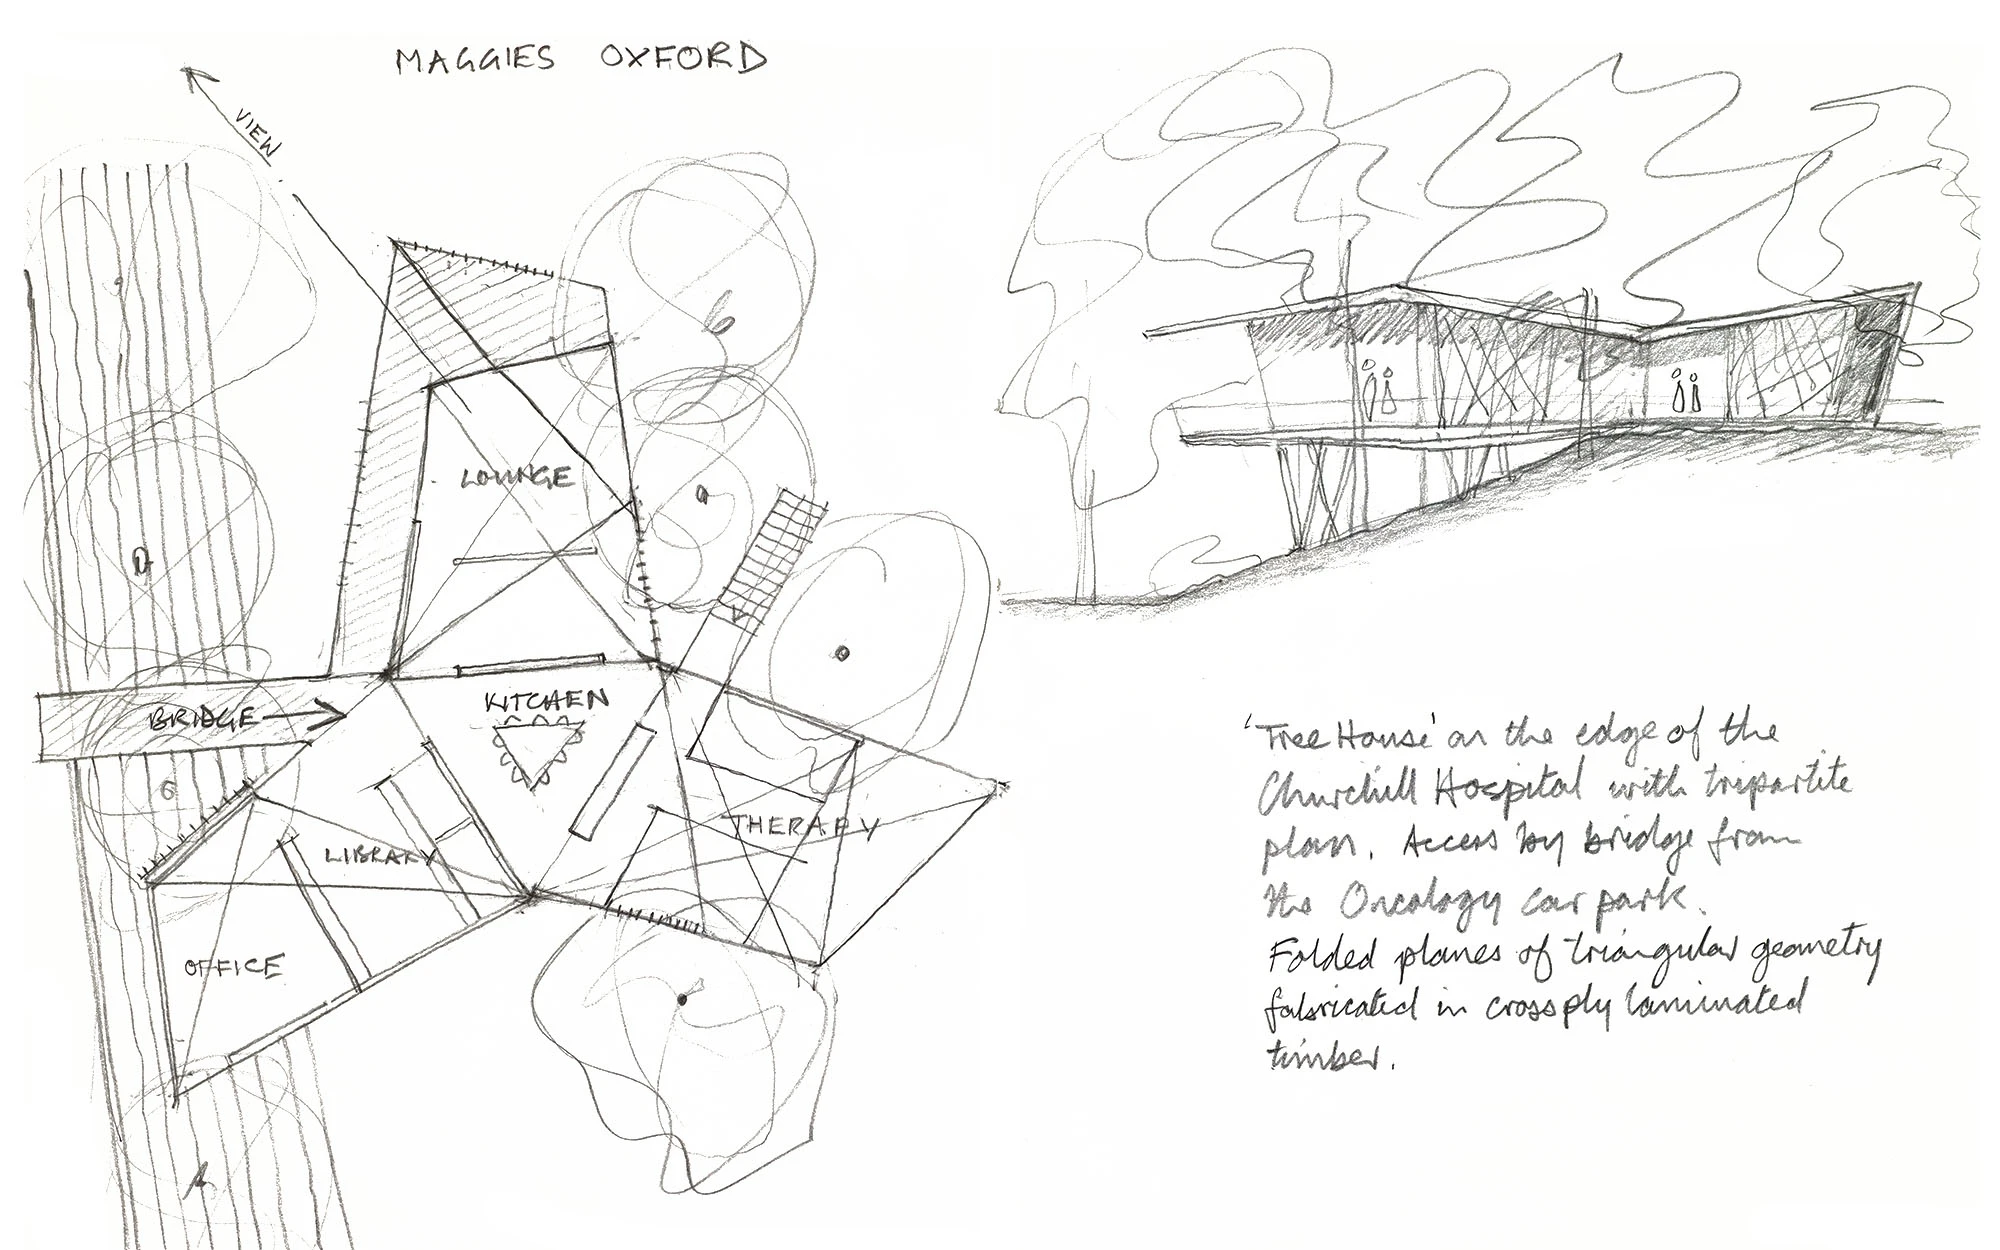 Concept sketch of the Maggie Centre Oxford